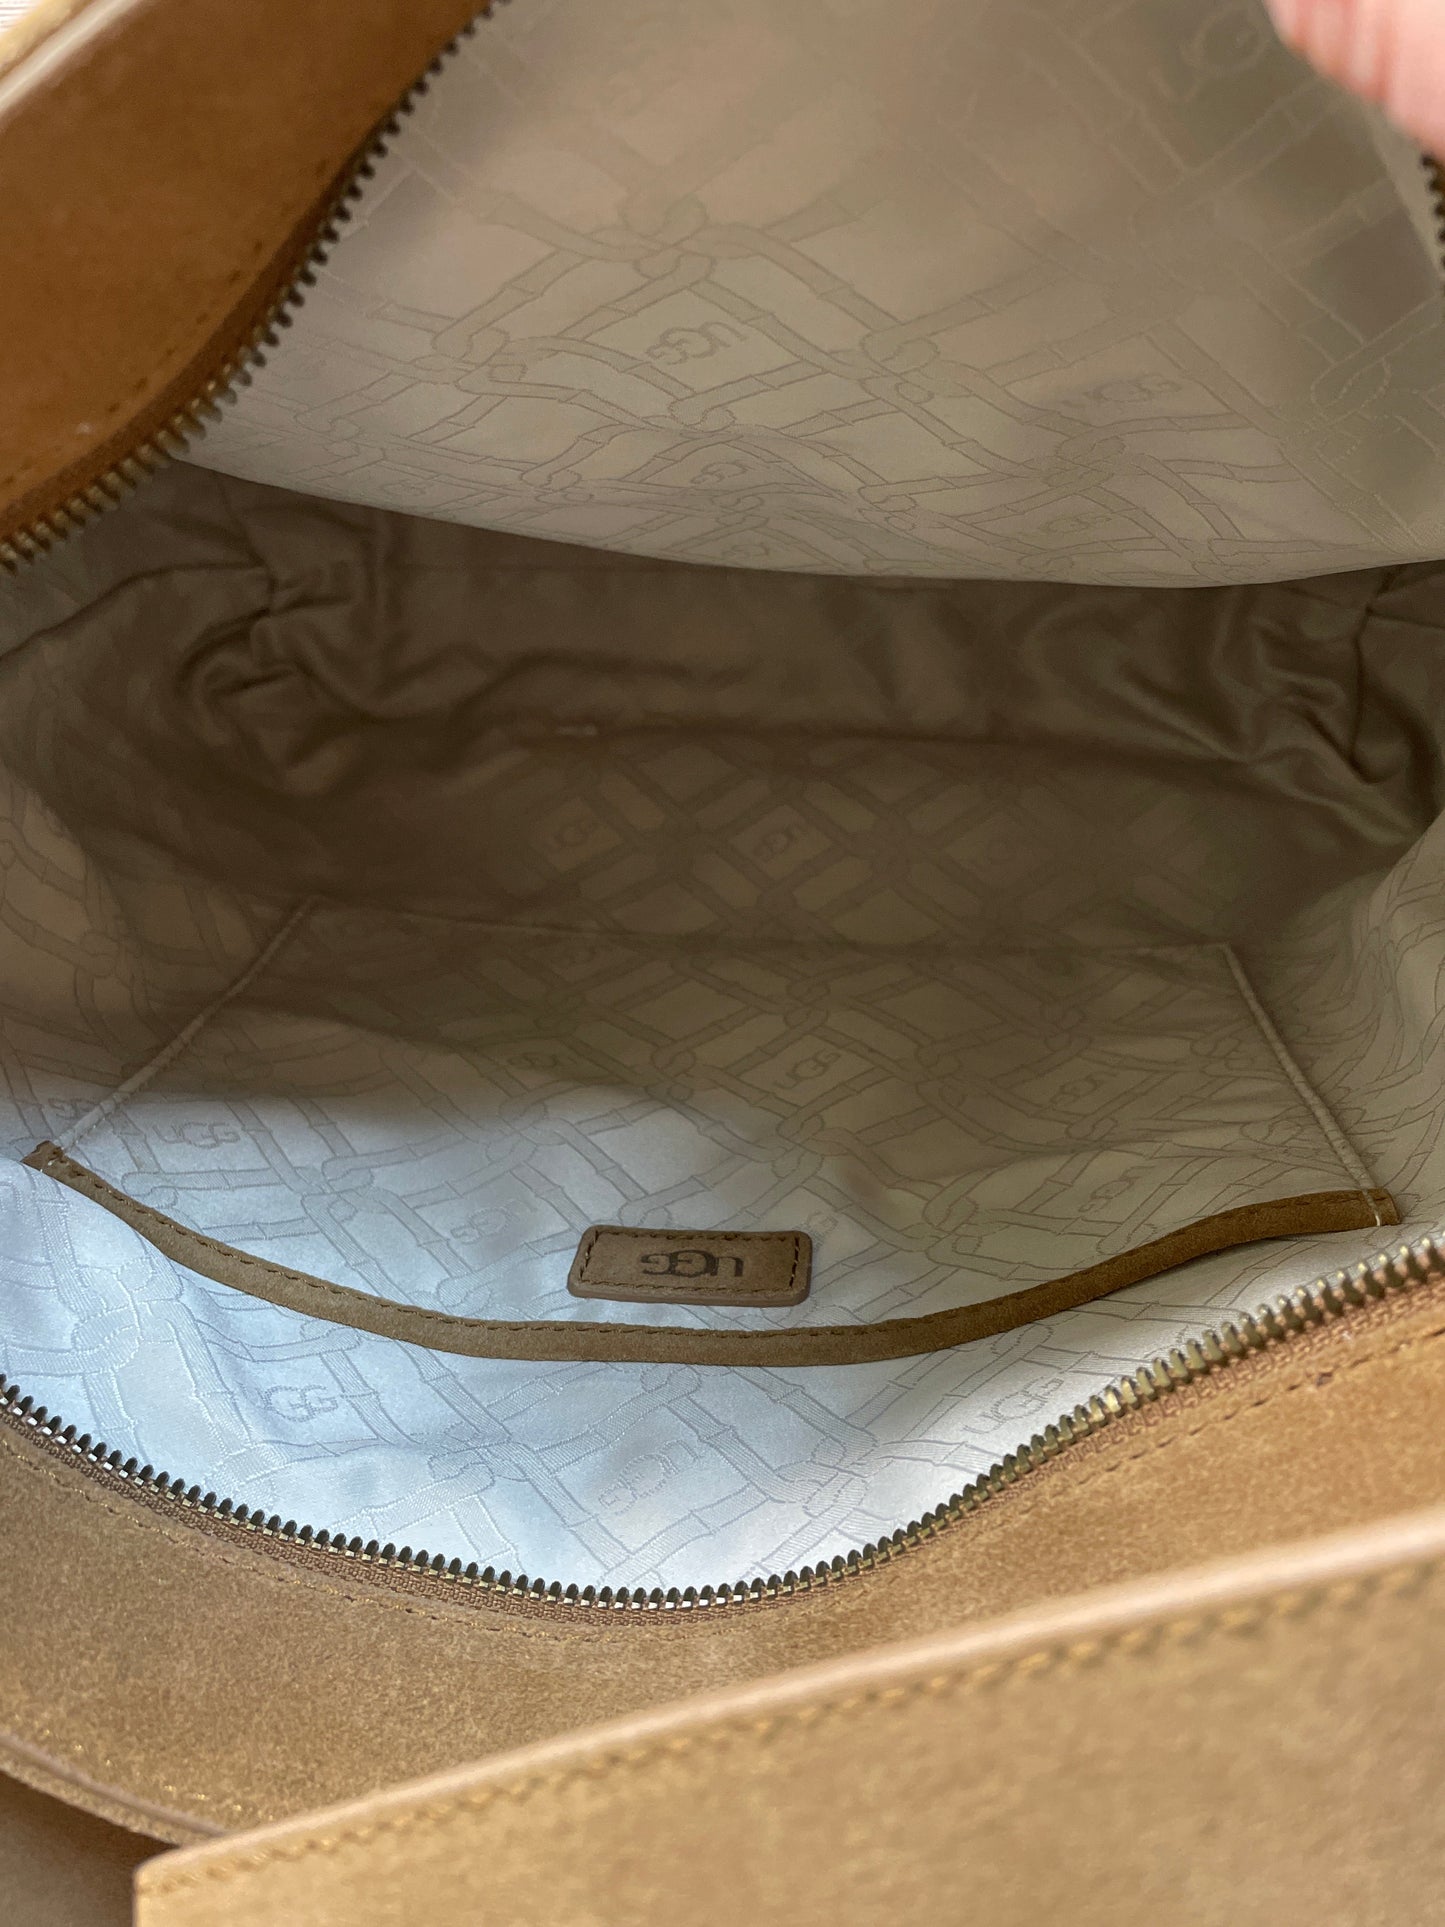 Handbag Leather By Ugg  Size: Medium